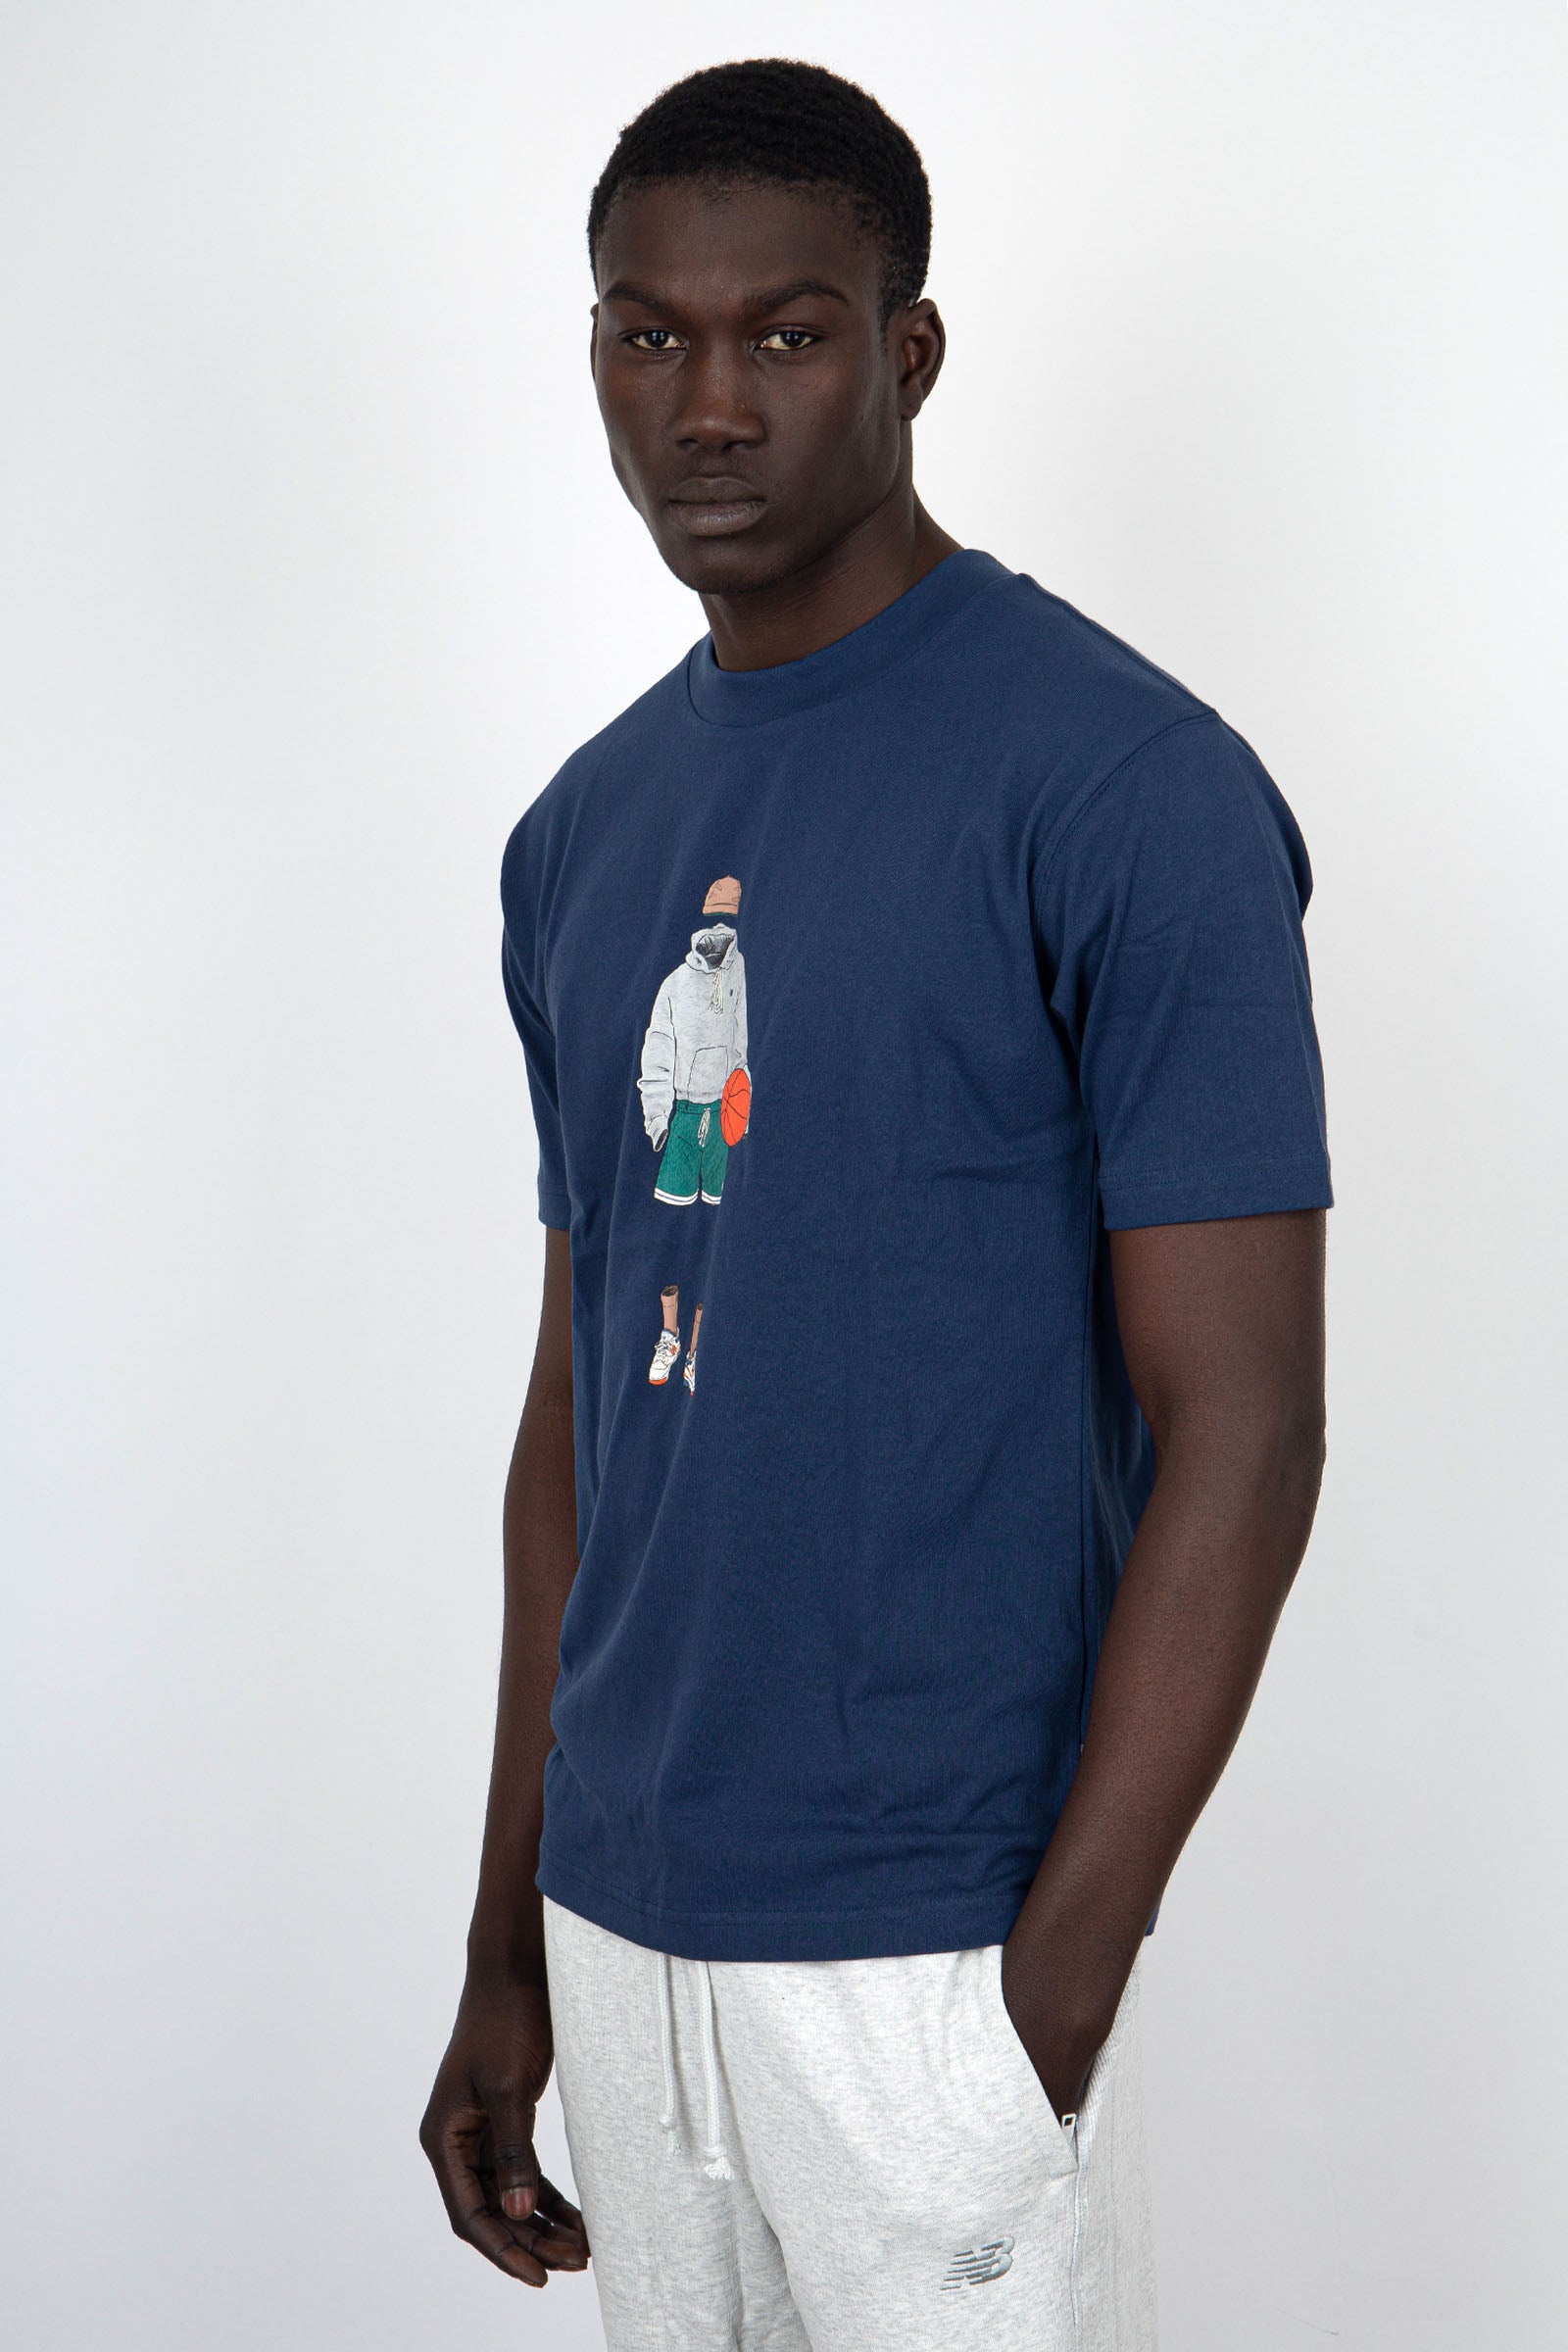 New Balance T-shirt NB Athletics Basketball Style Cotton Blue - 3